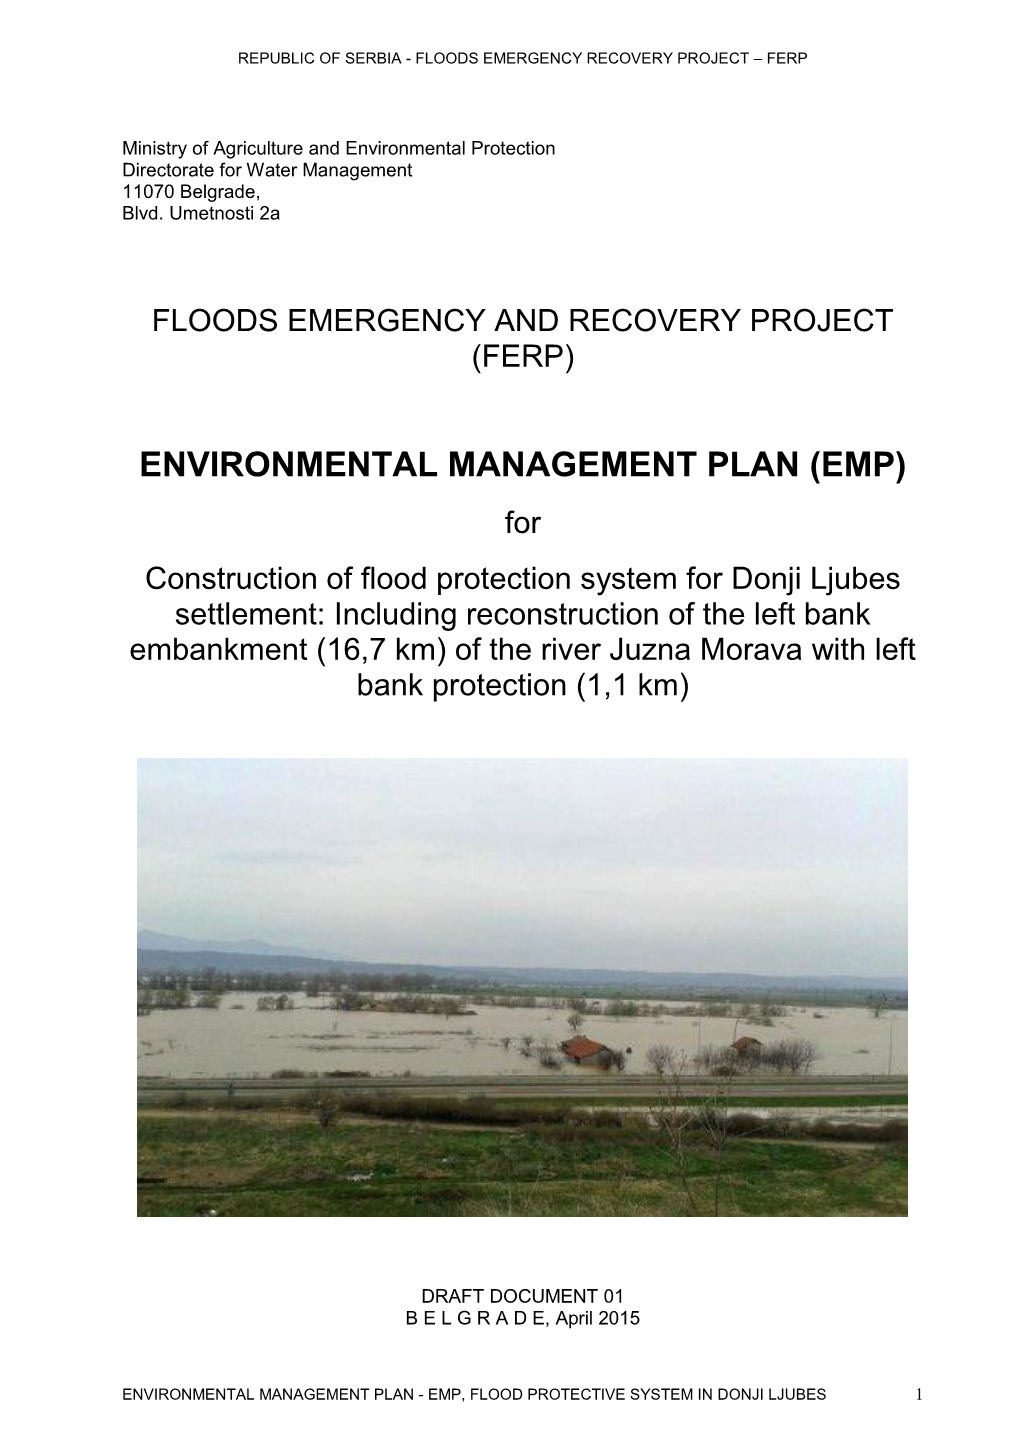 Environmental Management Plan (Emp)